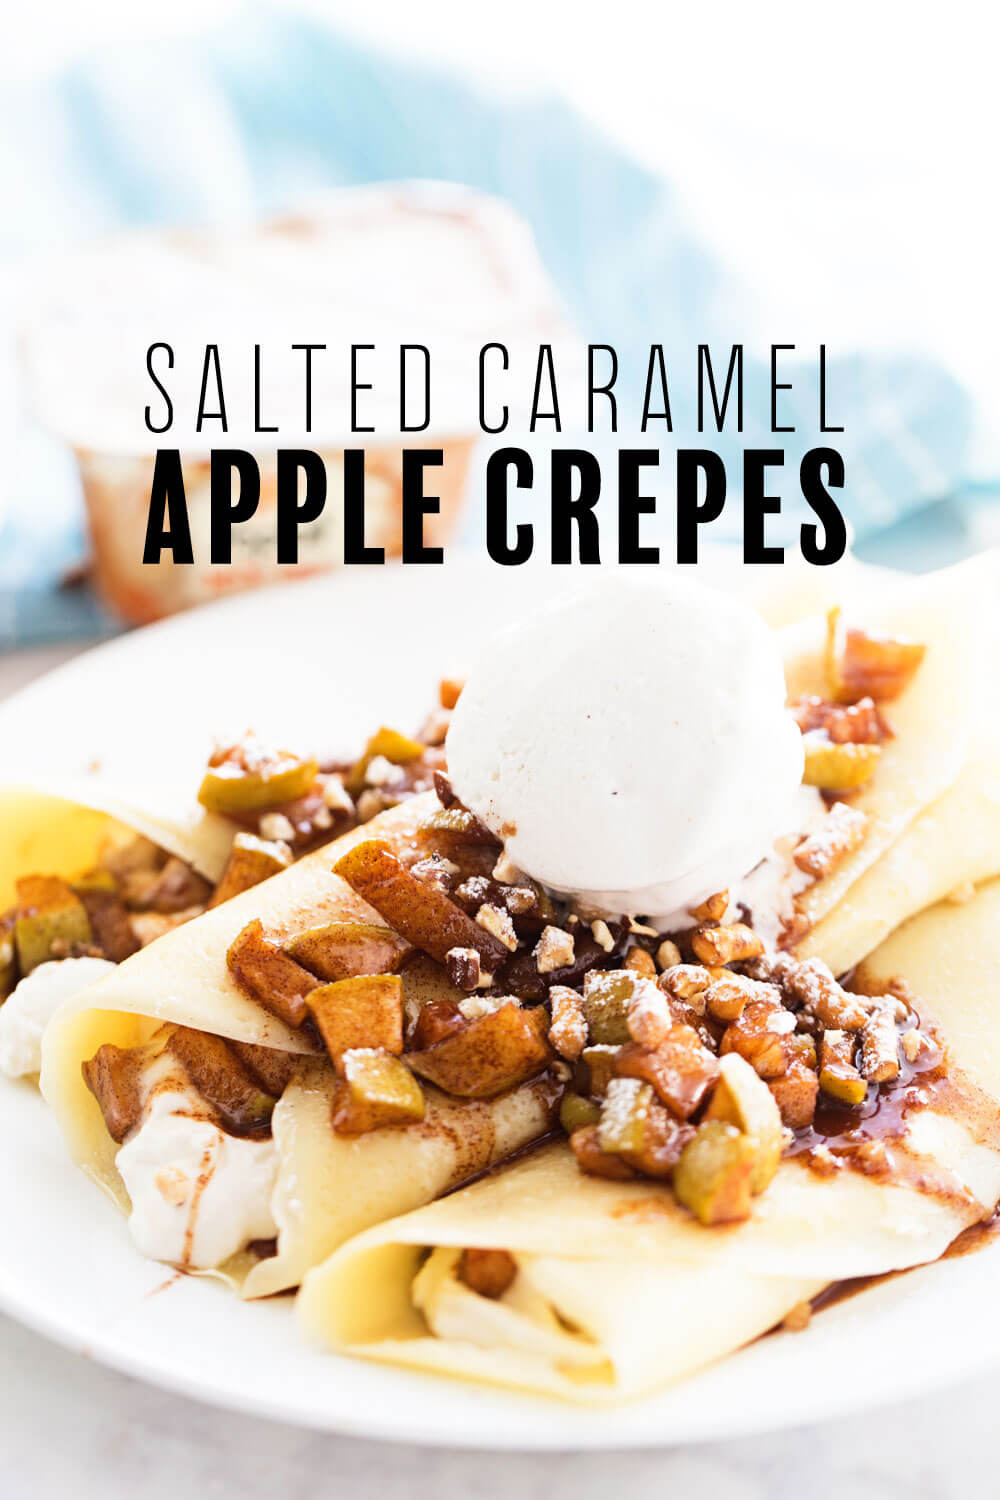 Salted Caramel Apple Crepe Recipe - the perfect breakfast OR dessert recipe for fall! Yum! From www.thirtyhandmadedays.com